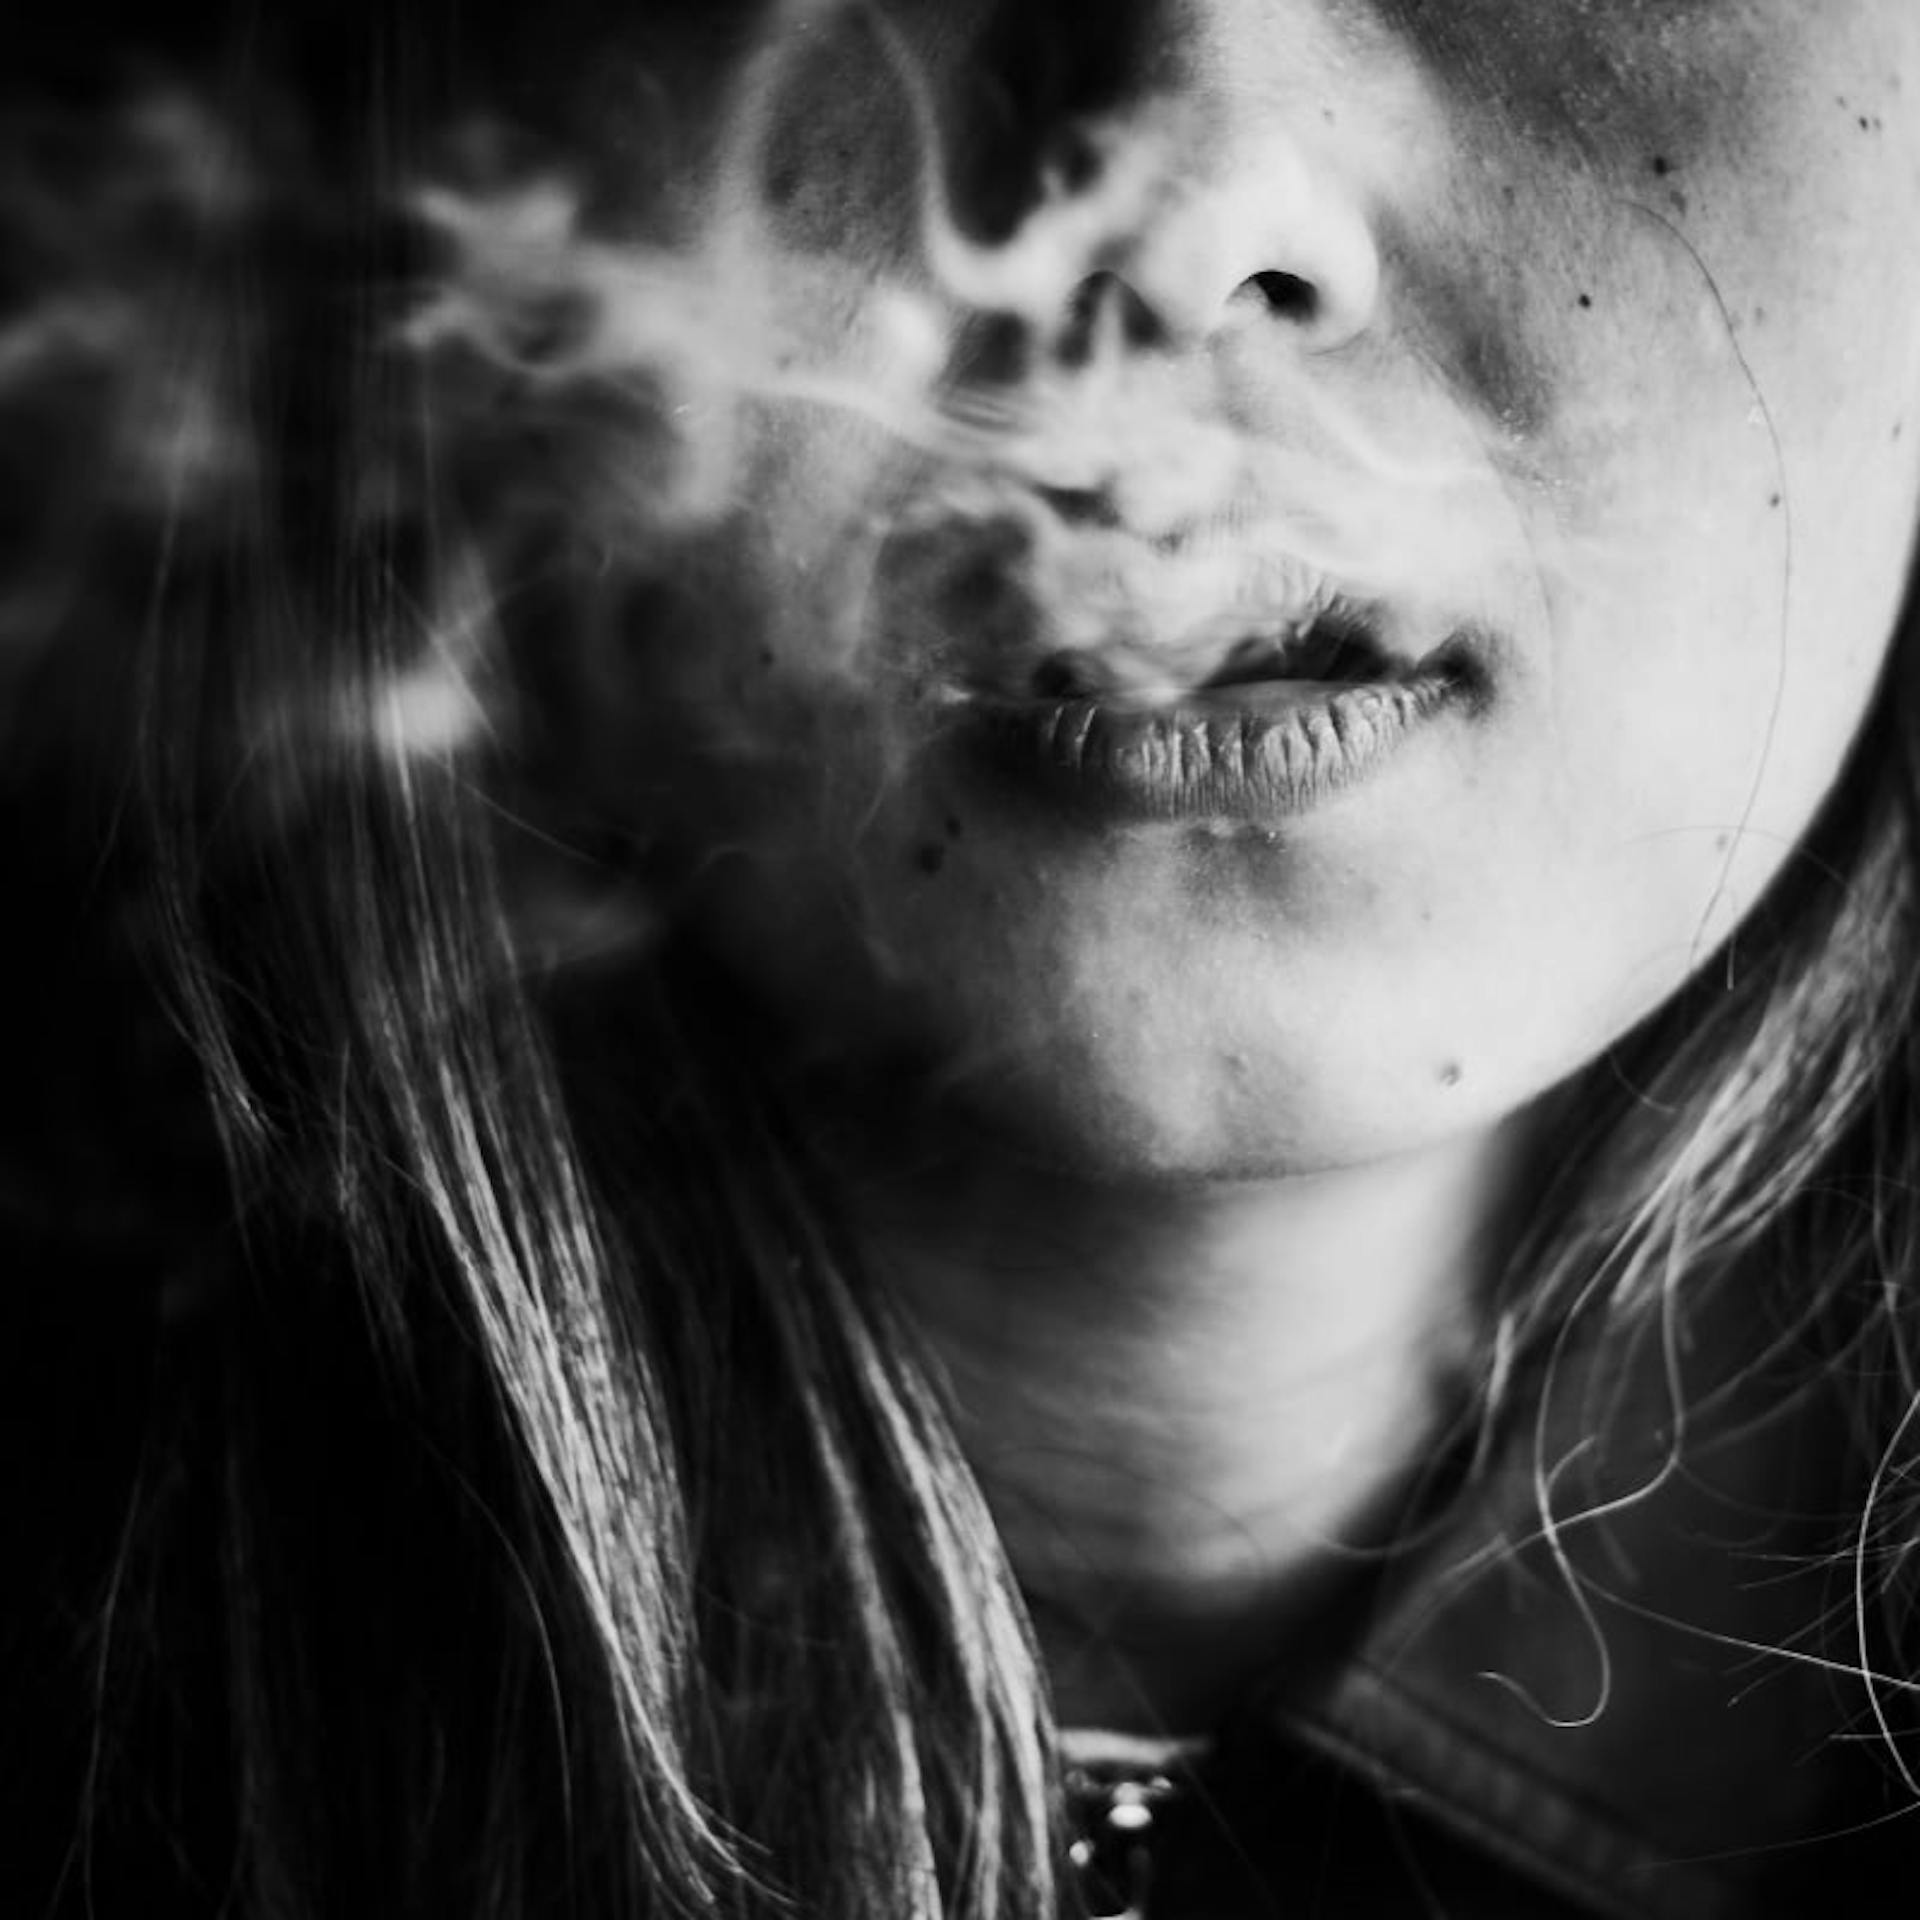 A young woman smoking meth.